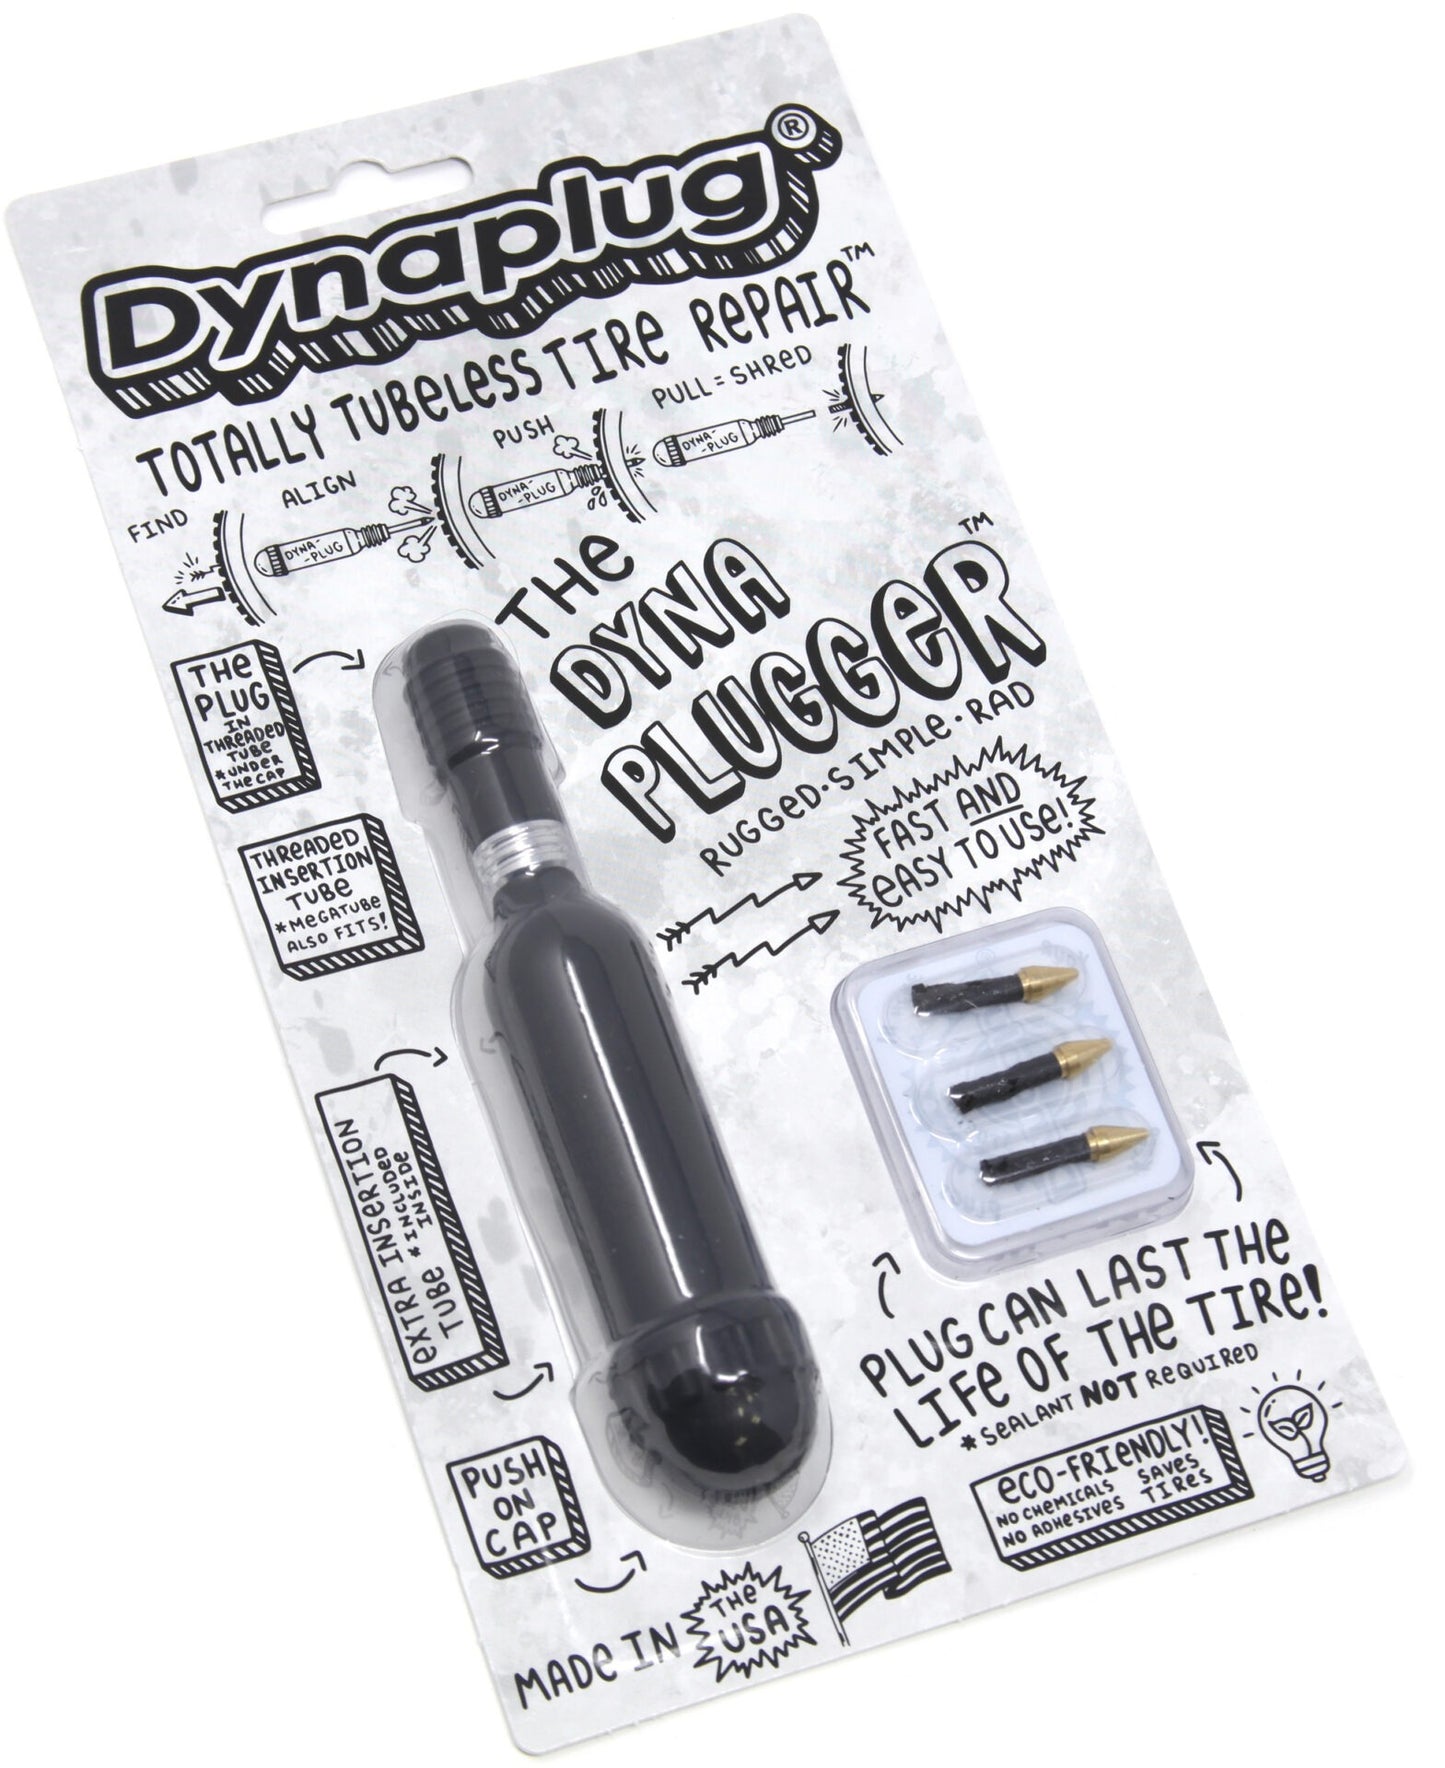 Dynaplug Dynaplugger Tubeless patch kit